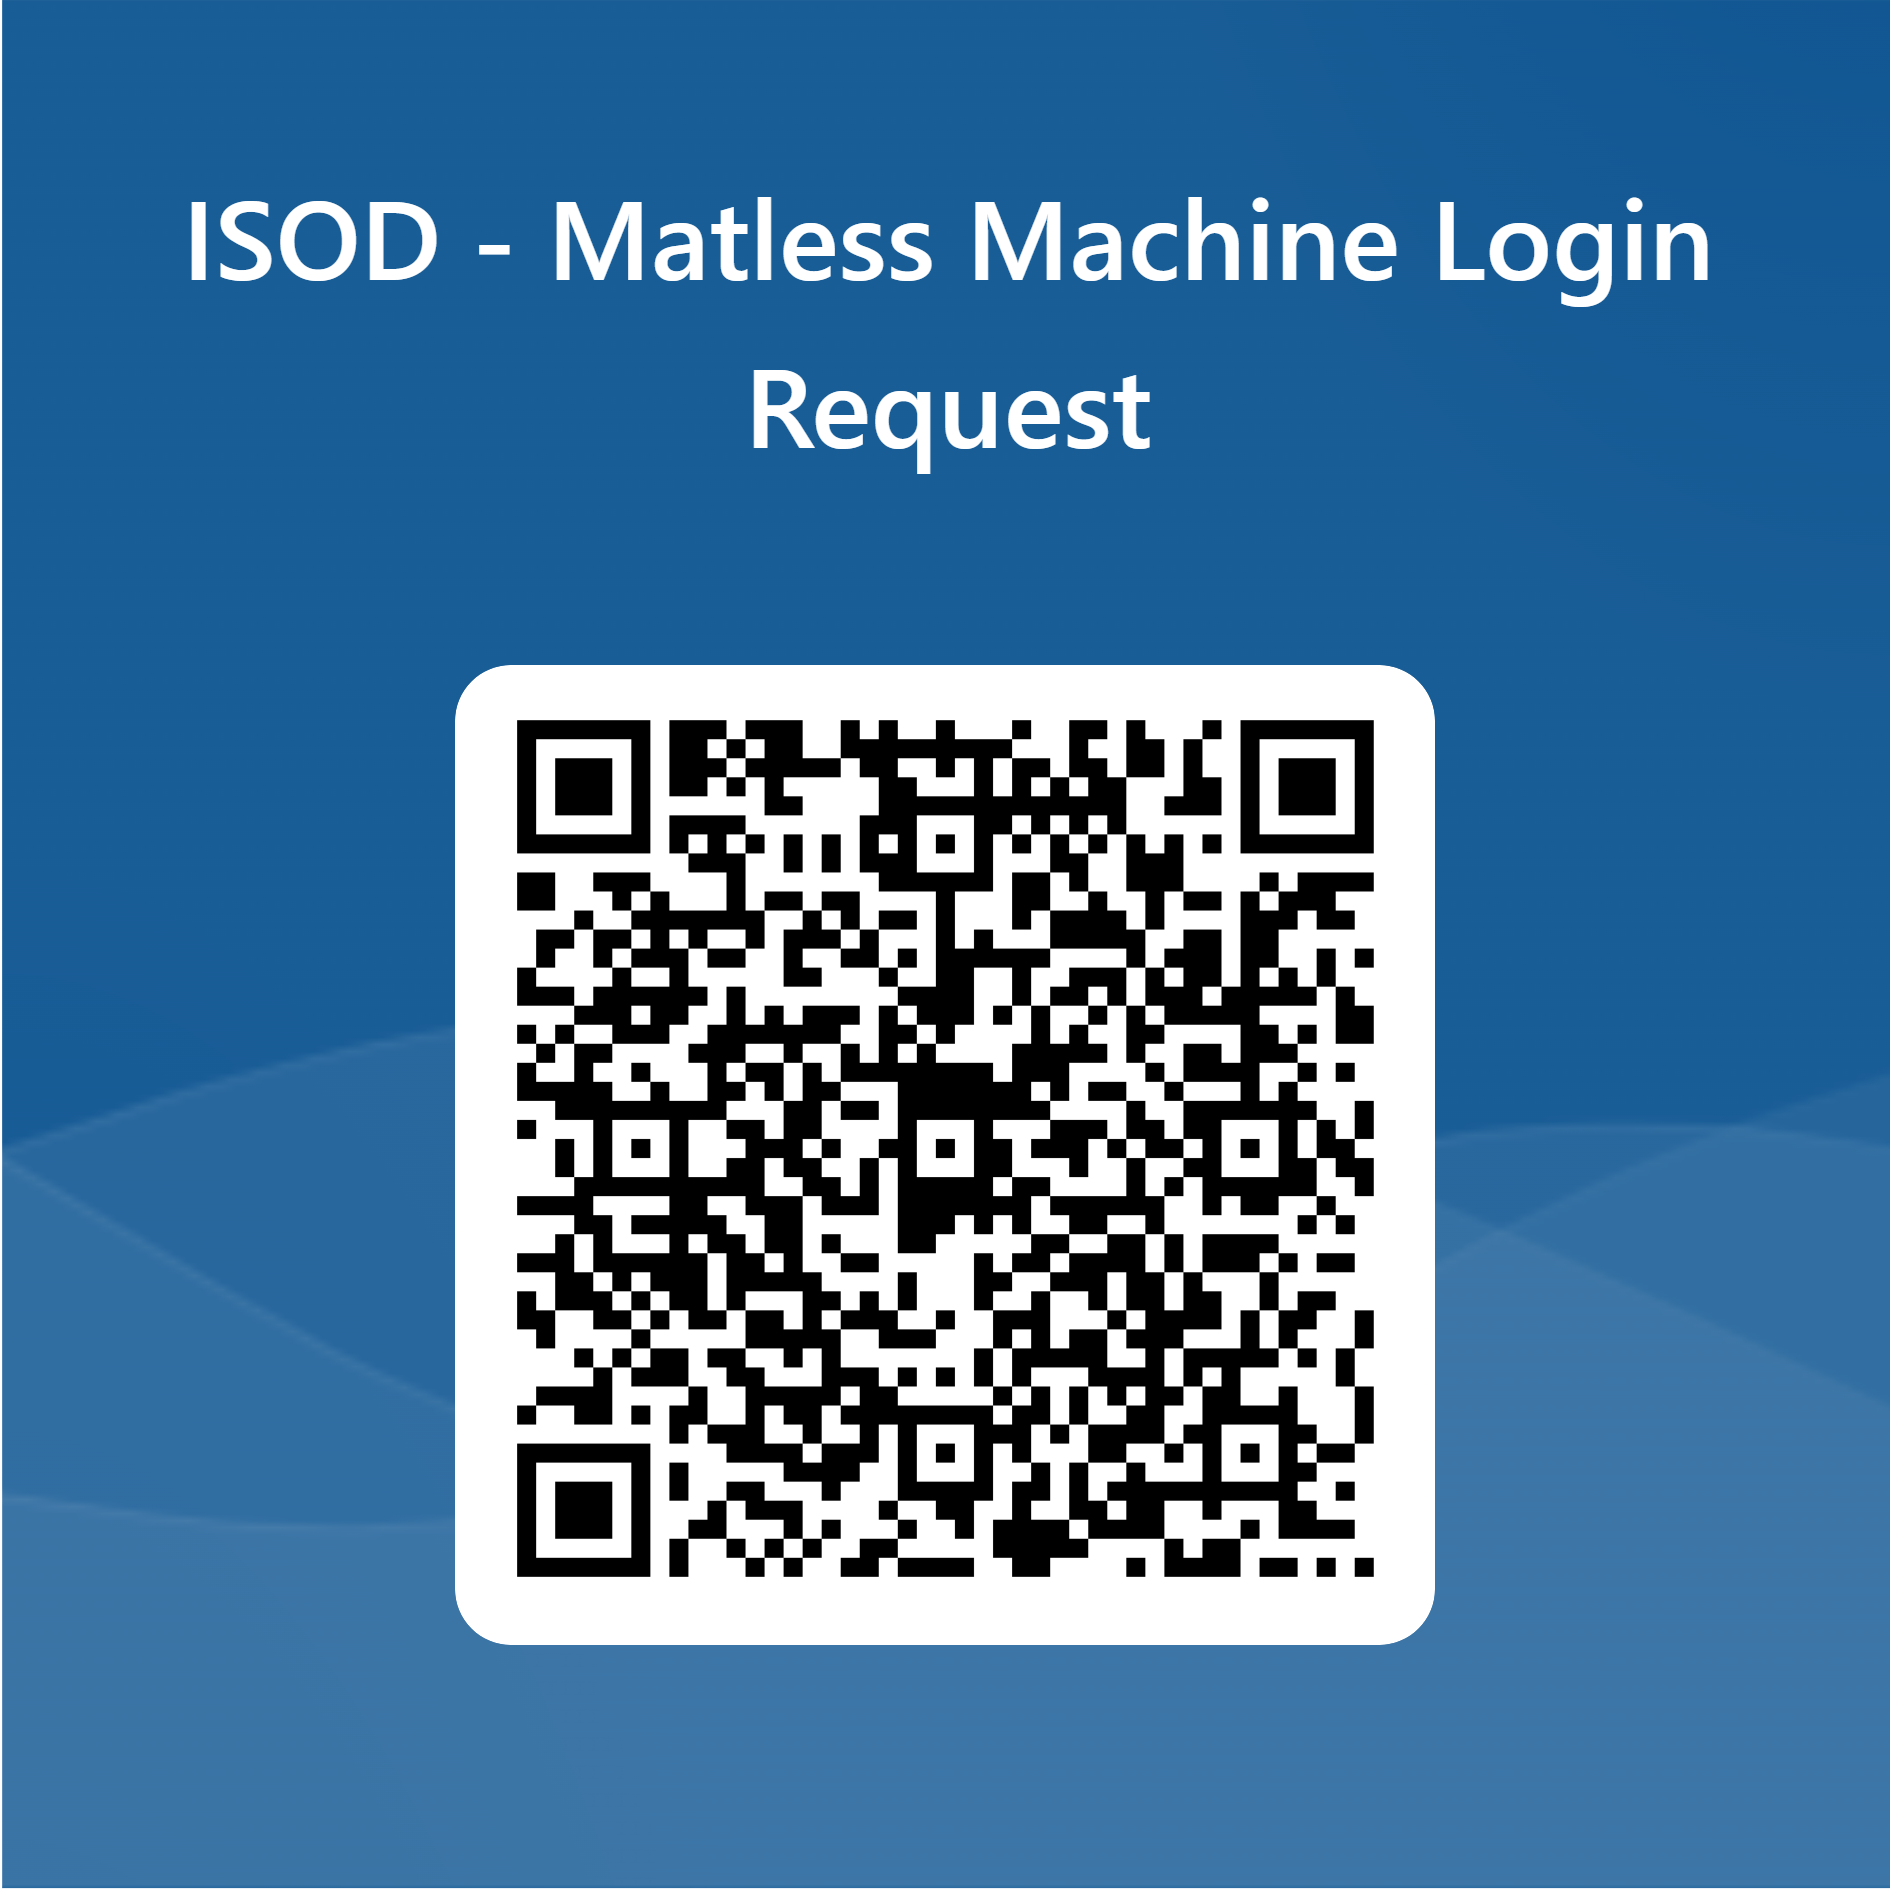 Demande de Connexion de Machine Matless ISOD